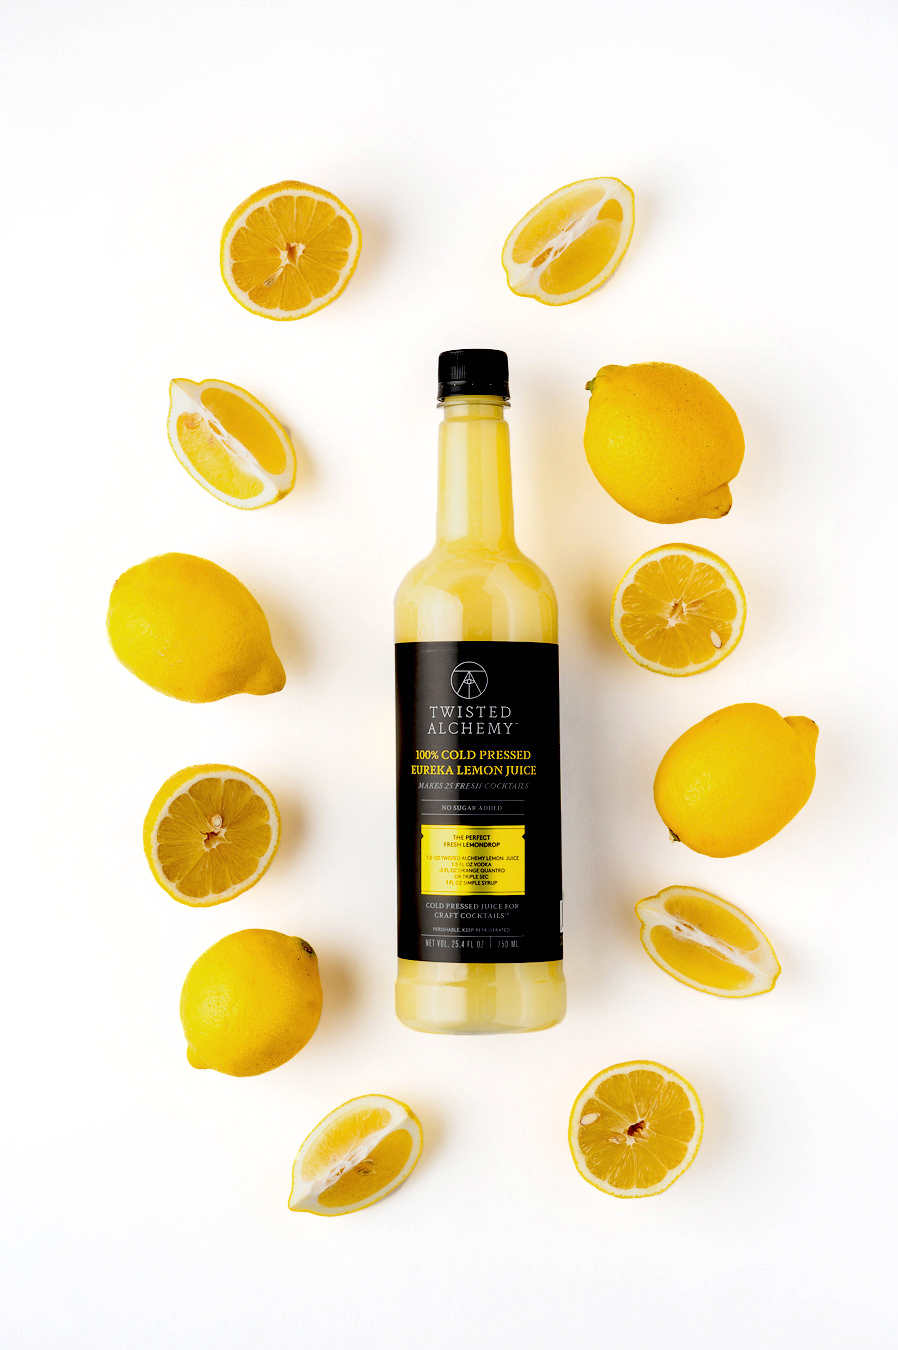 A bottle of lemon juice laid flat surrounded by various whole lemons, lemon halves, and lemon wedges against a white background.